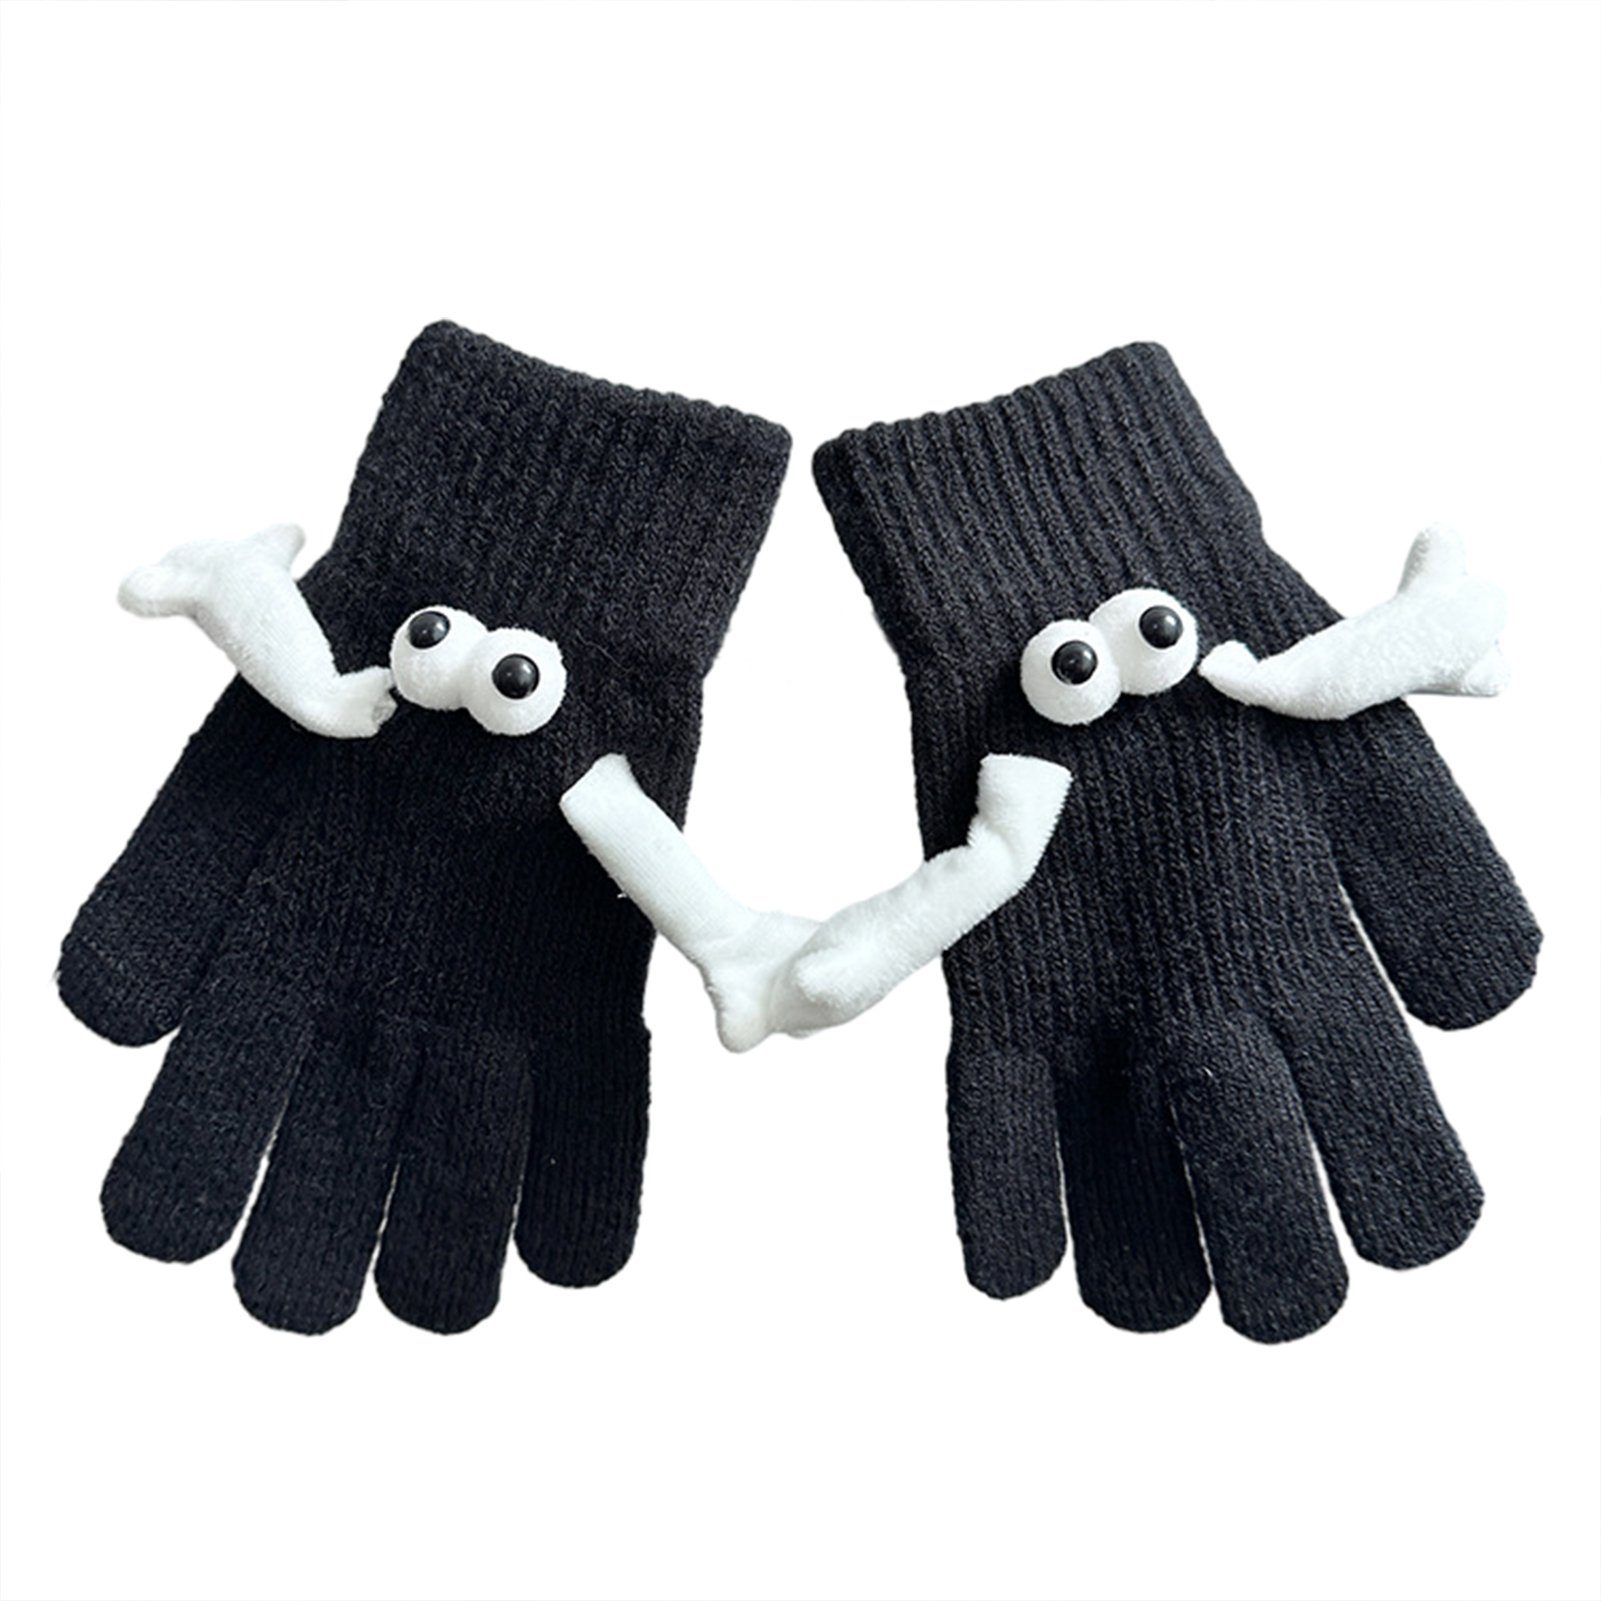 Blusmart Strickhandschuhe Warme Strickhandschuhe Mit Cartoon-Hand-in-Hand-Motiv, Bequem, Handschuhe black M